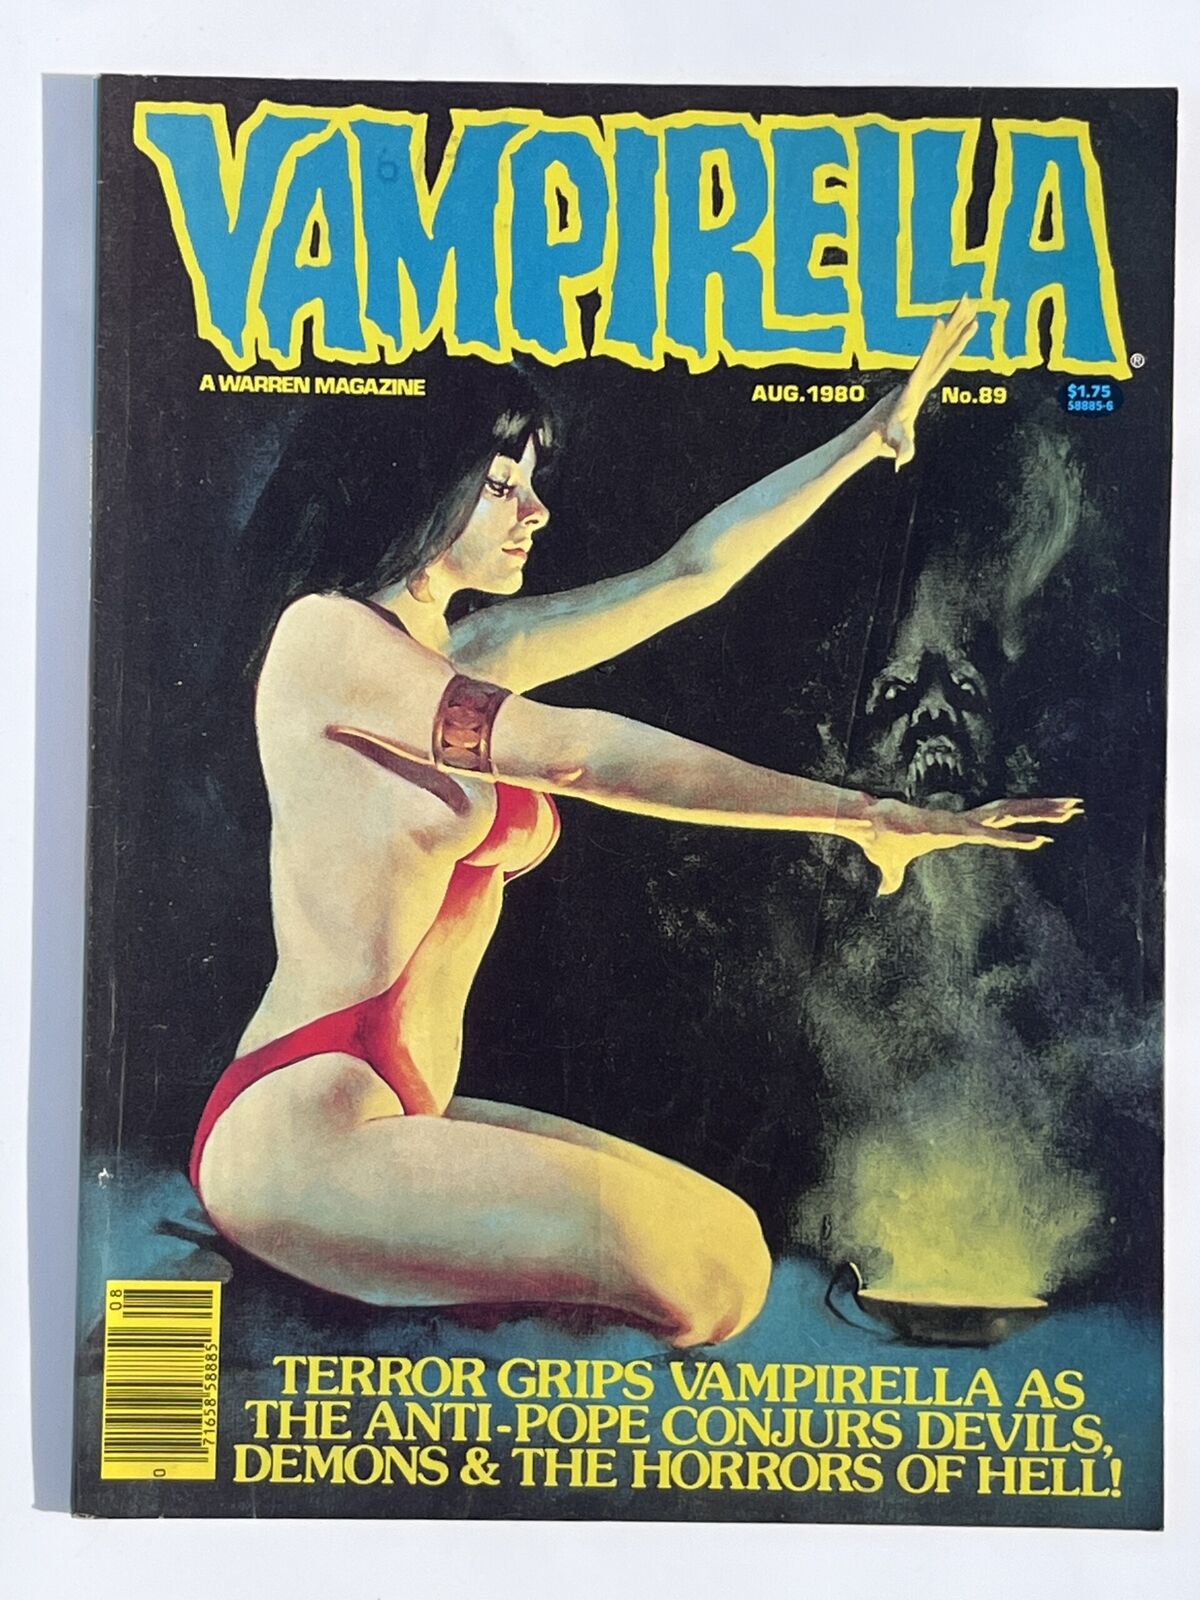 Vampirella #89 (1980) in Ungraded